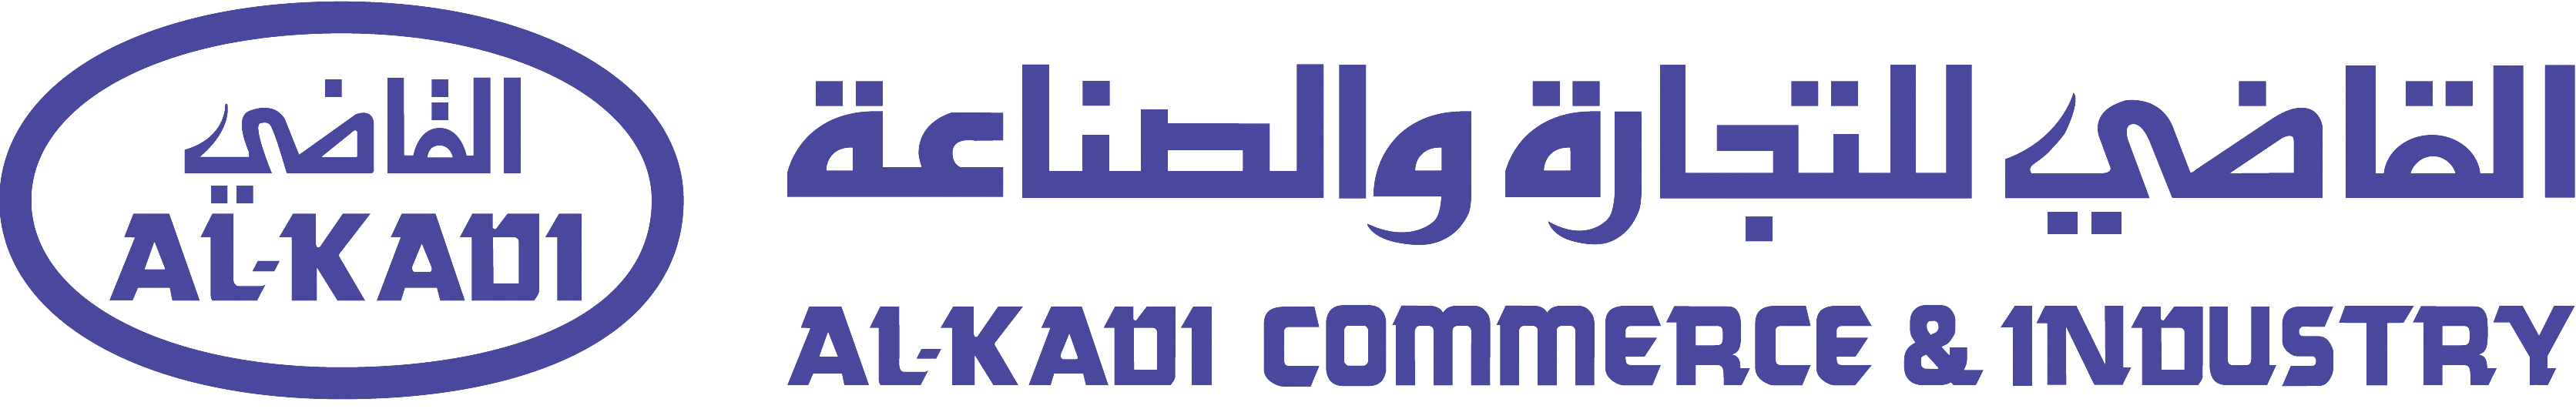 Al-Kadi Commerce & Industry